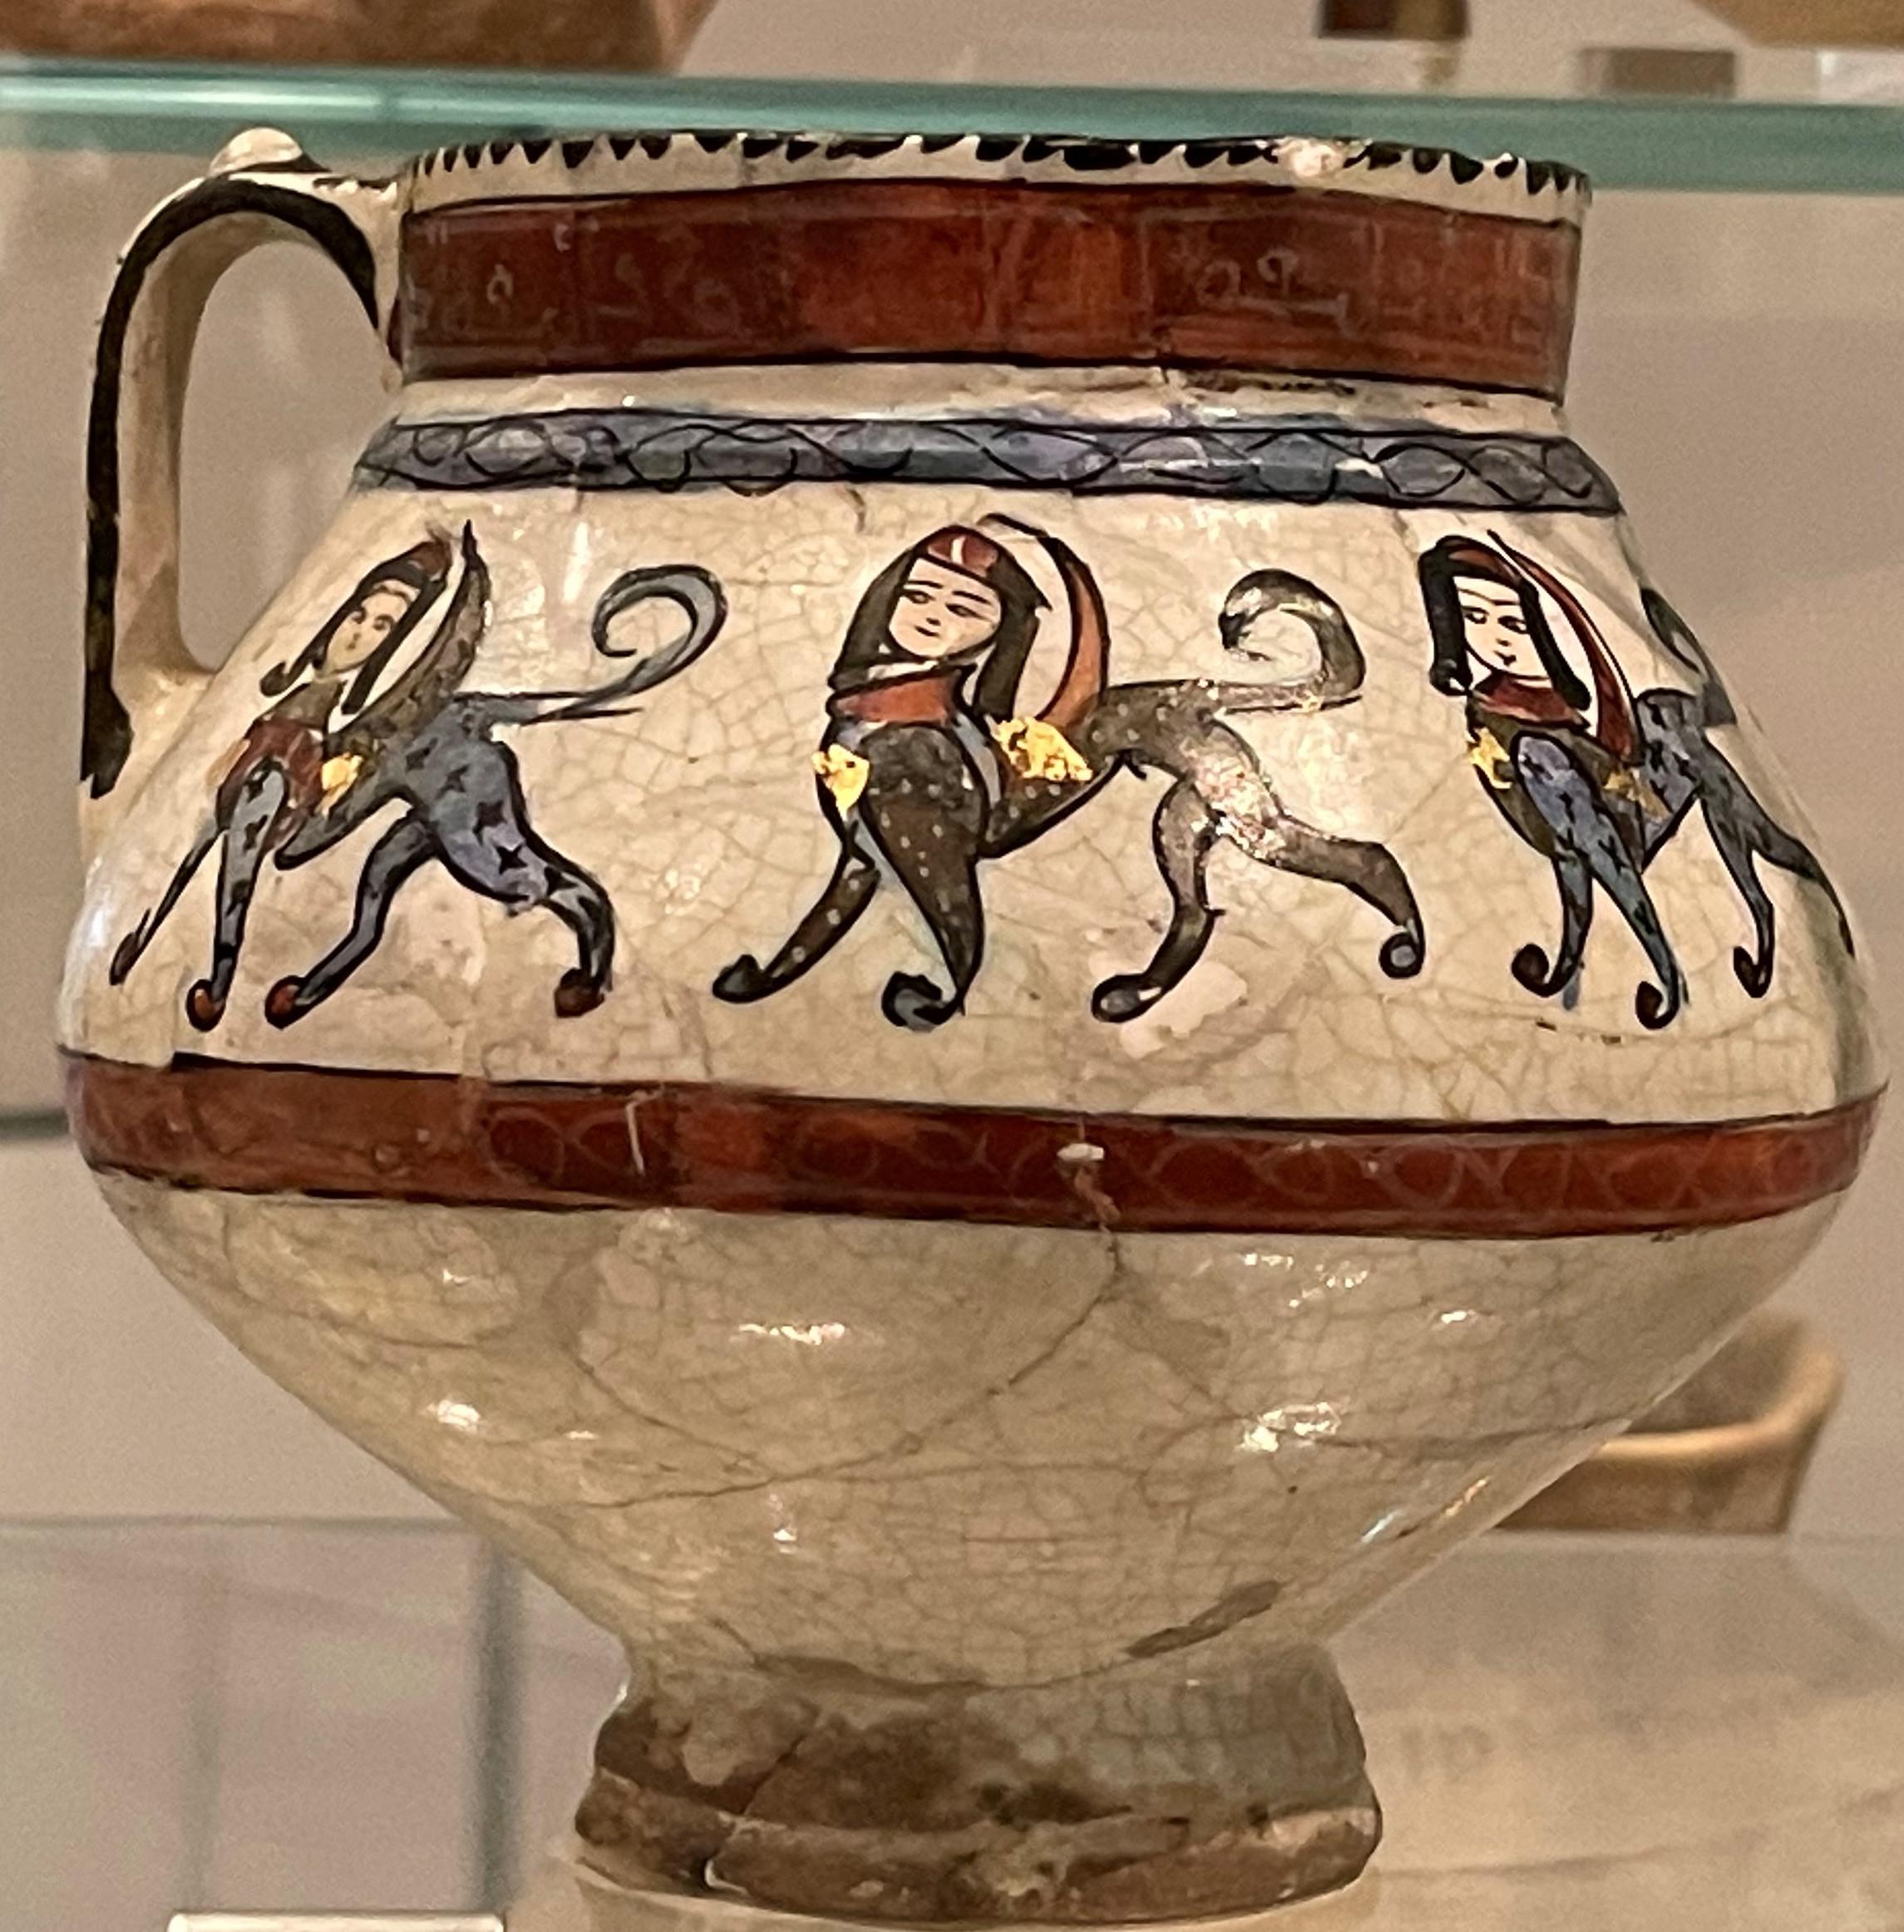 Glazed Cup with Female Sphinxes, Mesopotamia-Levant, c. 100 BCE.jpg